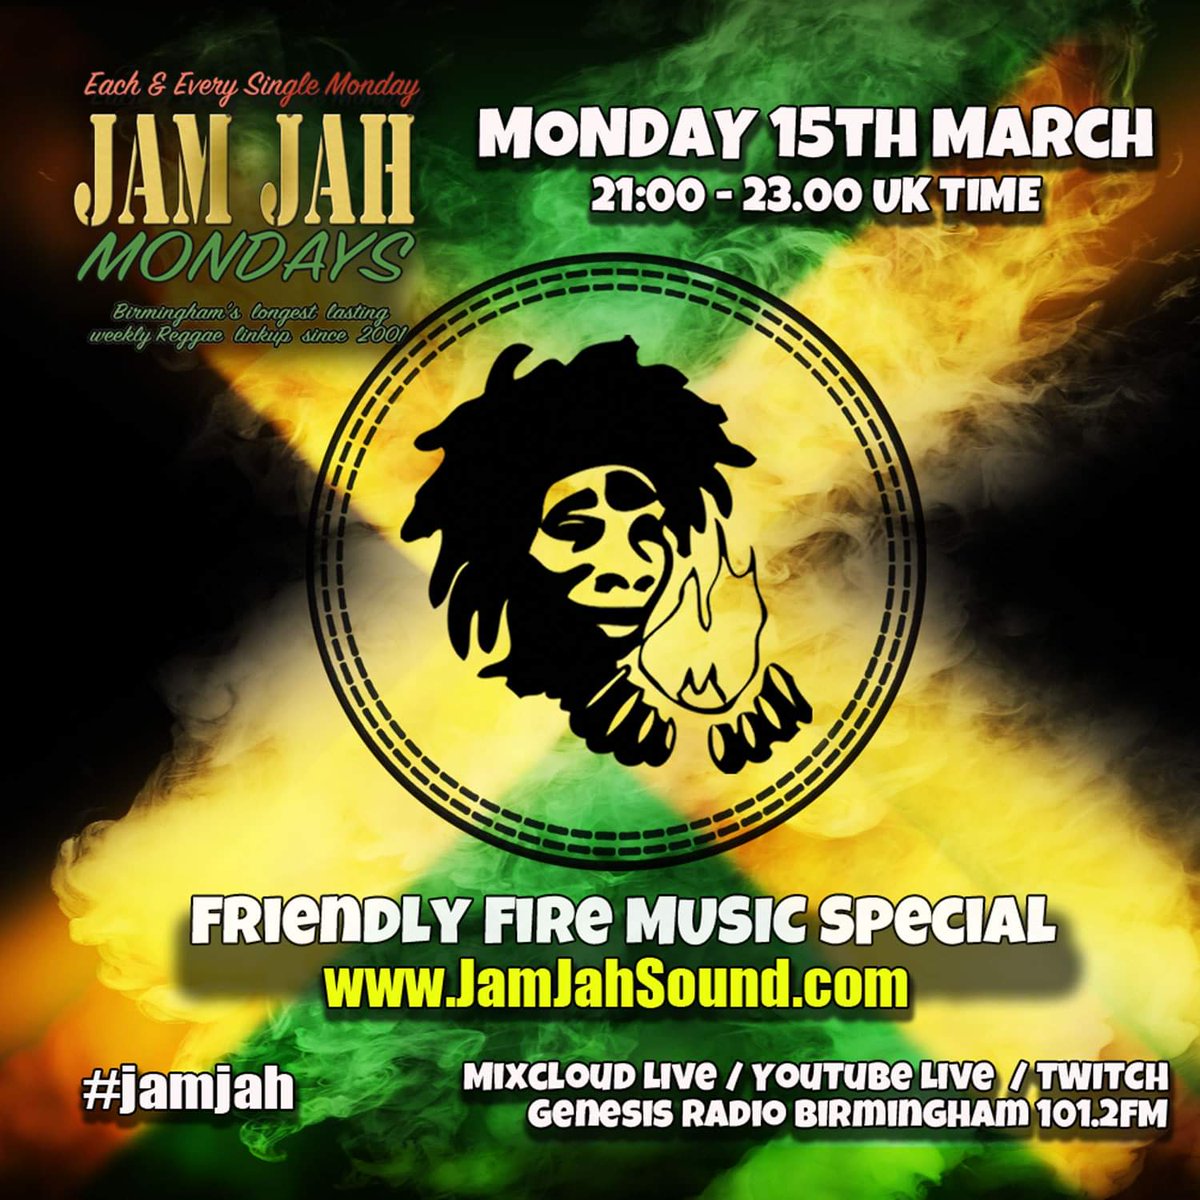 RT JamJahSound1: Tonight #jamjahmondays focuses on #friendlyfiremusic prods for 2 hours straight wid @bongo_damo & @MykiTuff @Robin_FF
tune in jamjahsound.com at 9-11pm UK Time #ukreggae #0121reggae #badlands  @regfraternityuk  @exiledibrave @pe…